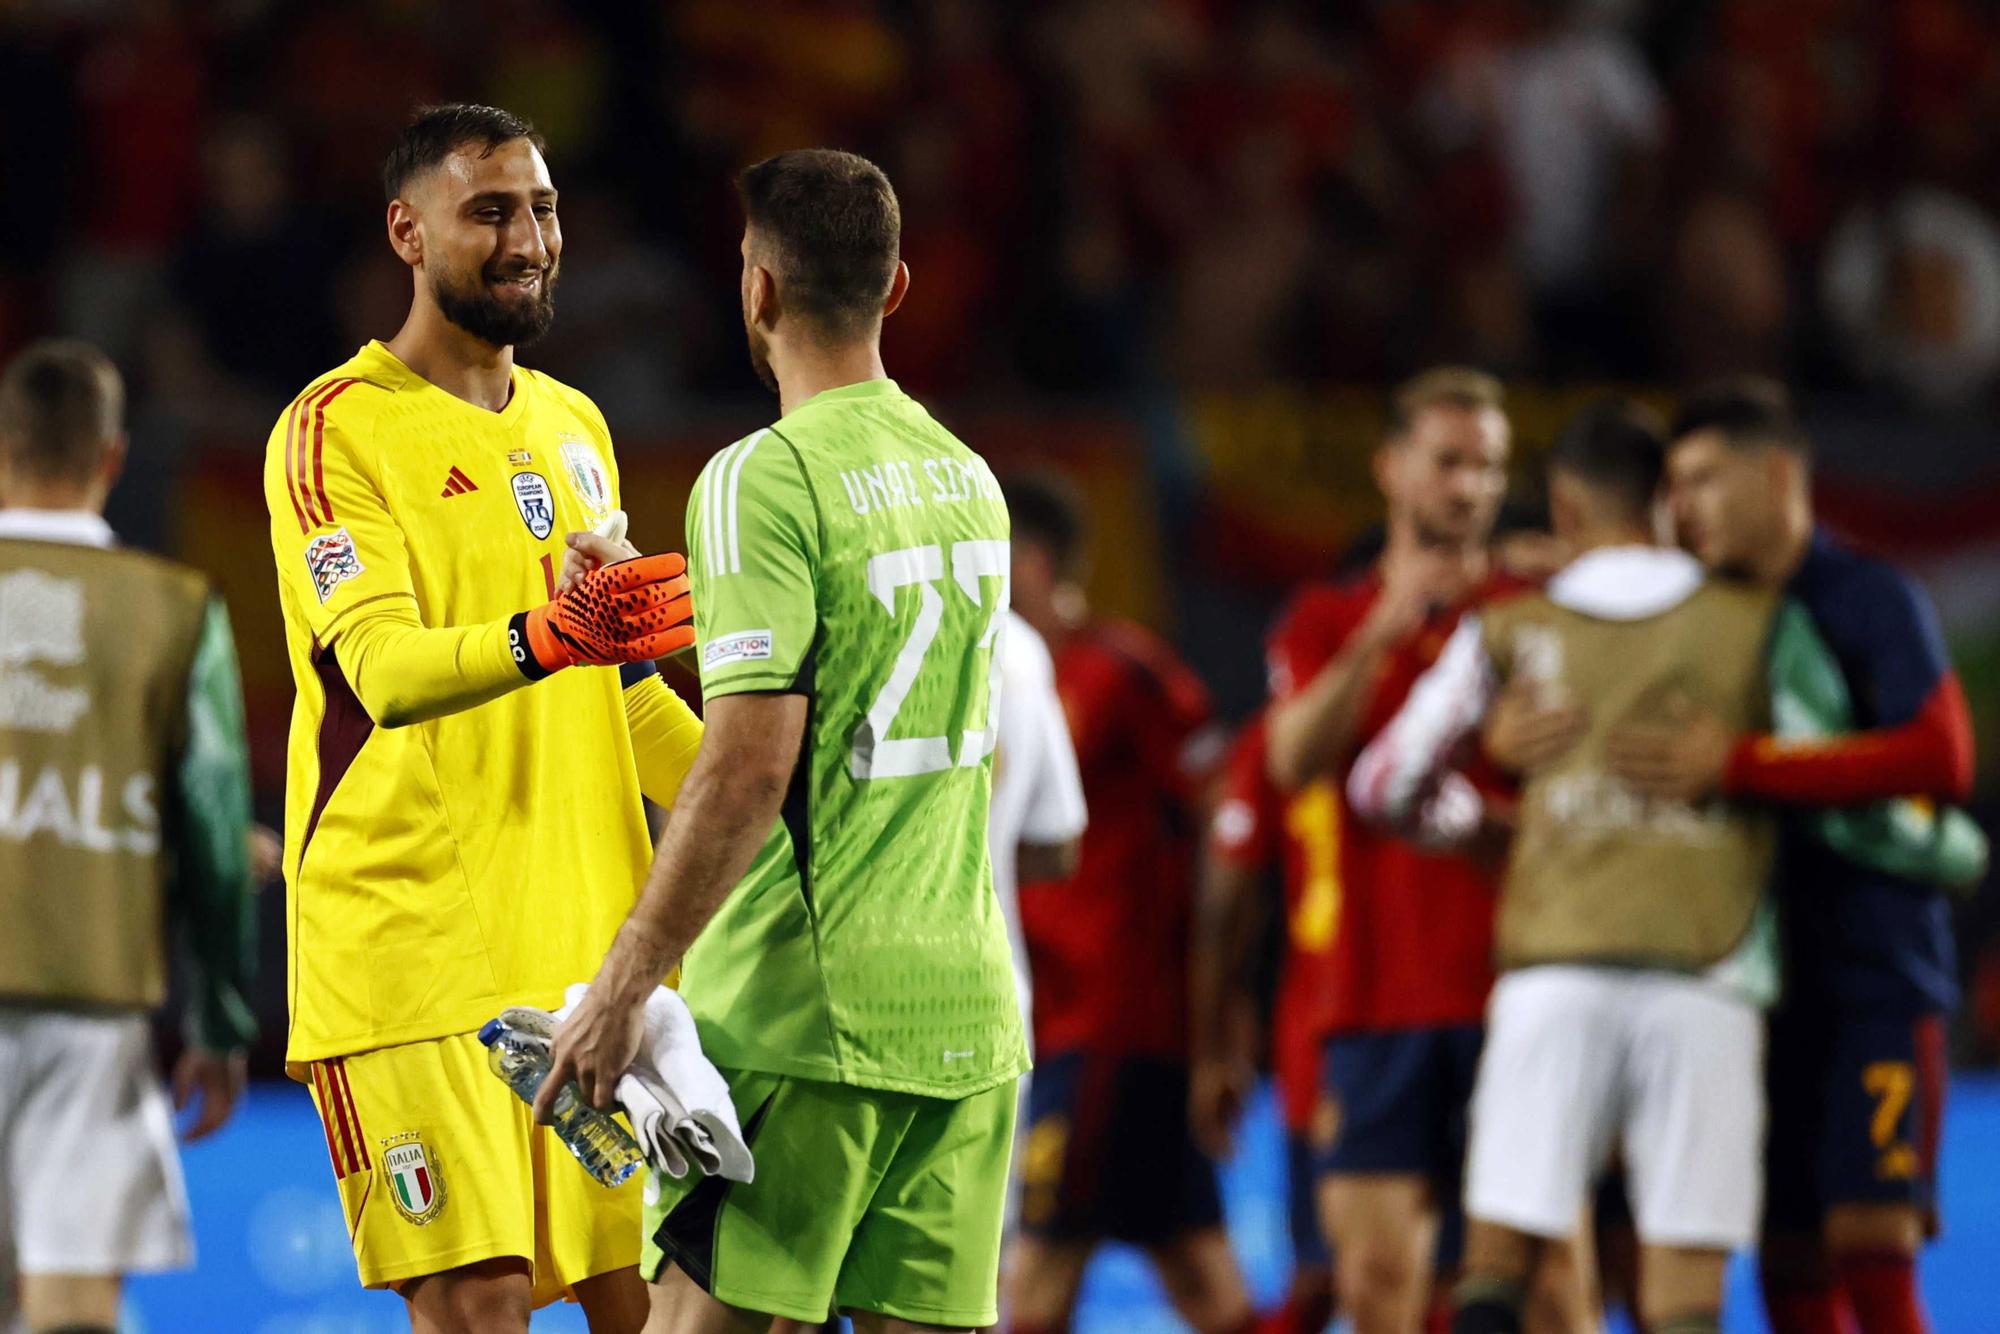 UEFA Nations League semi-final - Spain vs Italy